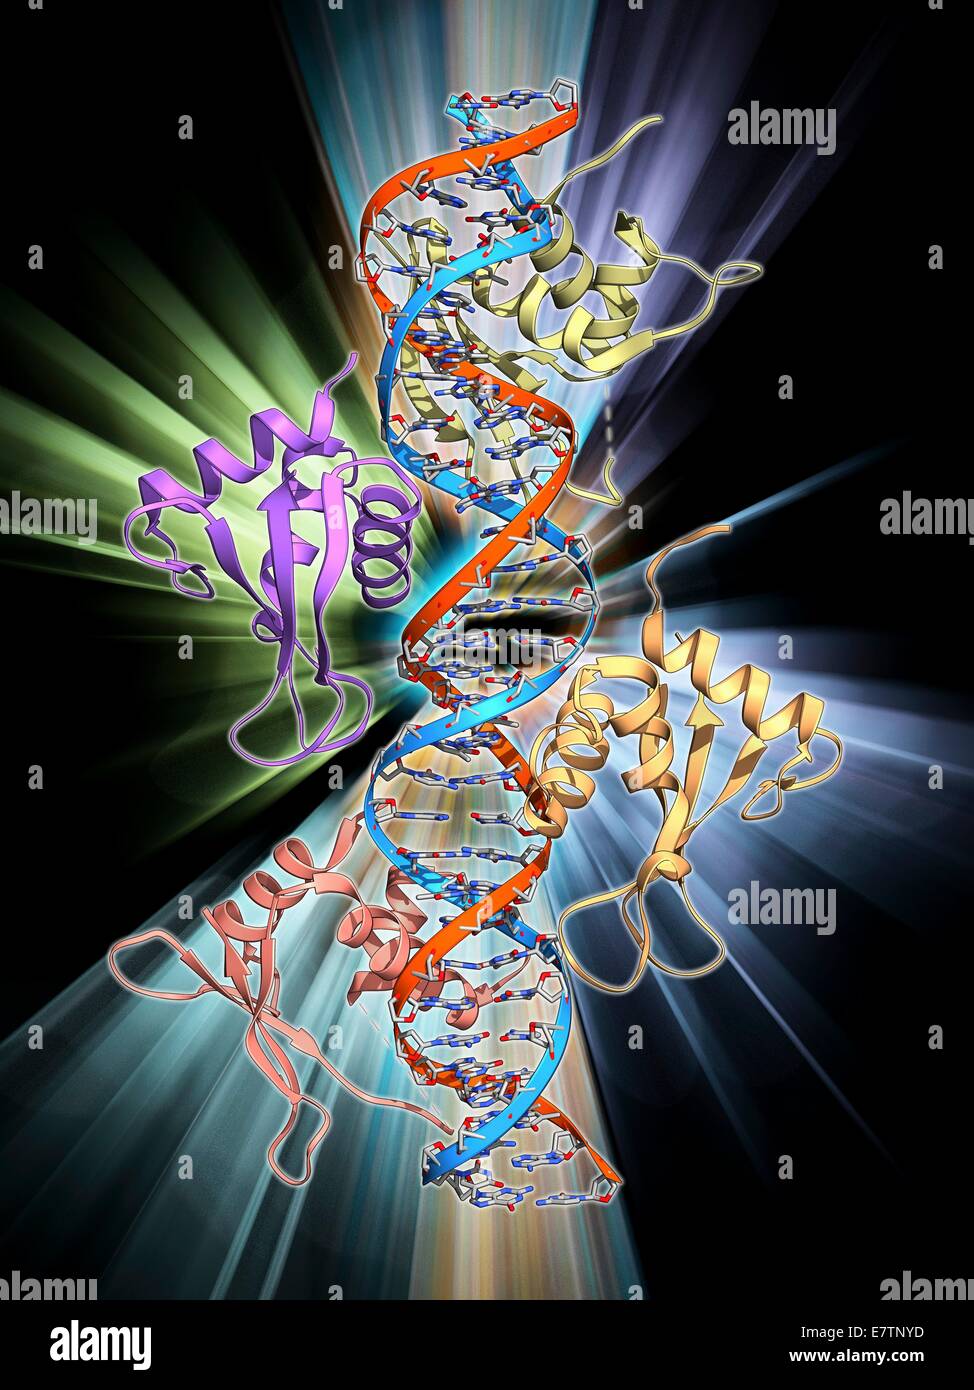 Interferon regulatory Factor. Molekülmodell von Interferon regulatory Factor 3 (IRF3, Spulen rechts und links) gebunden an ein Molekül der DNA (Desoxyribonukleinsäure) (rot und blau). IRF3 ist Mitglied der Interferon regulatory Transkription Faktor Familie. Es b Stockfoto